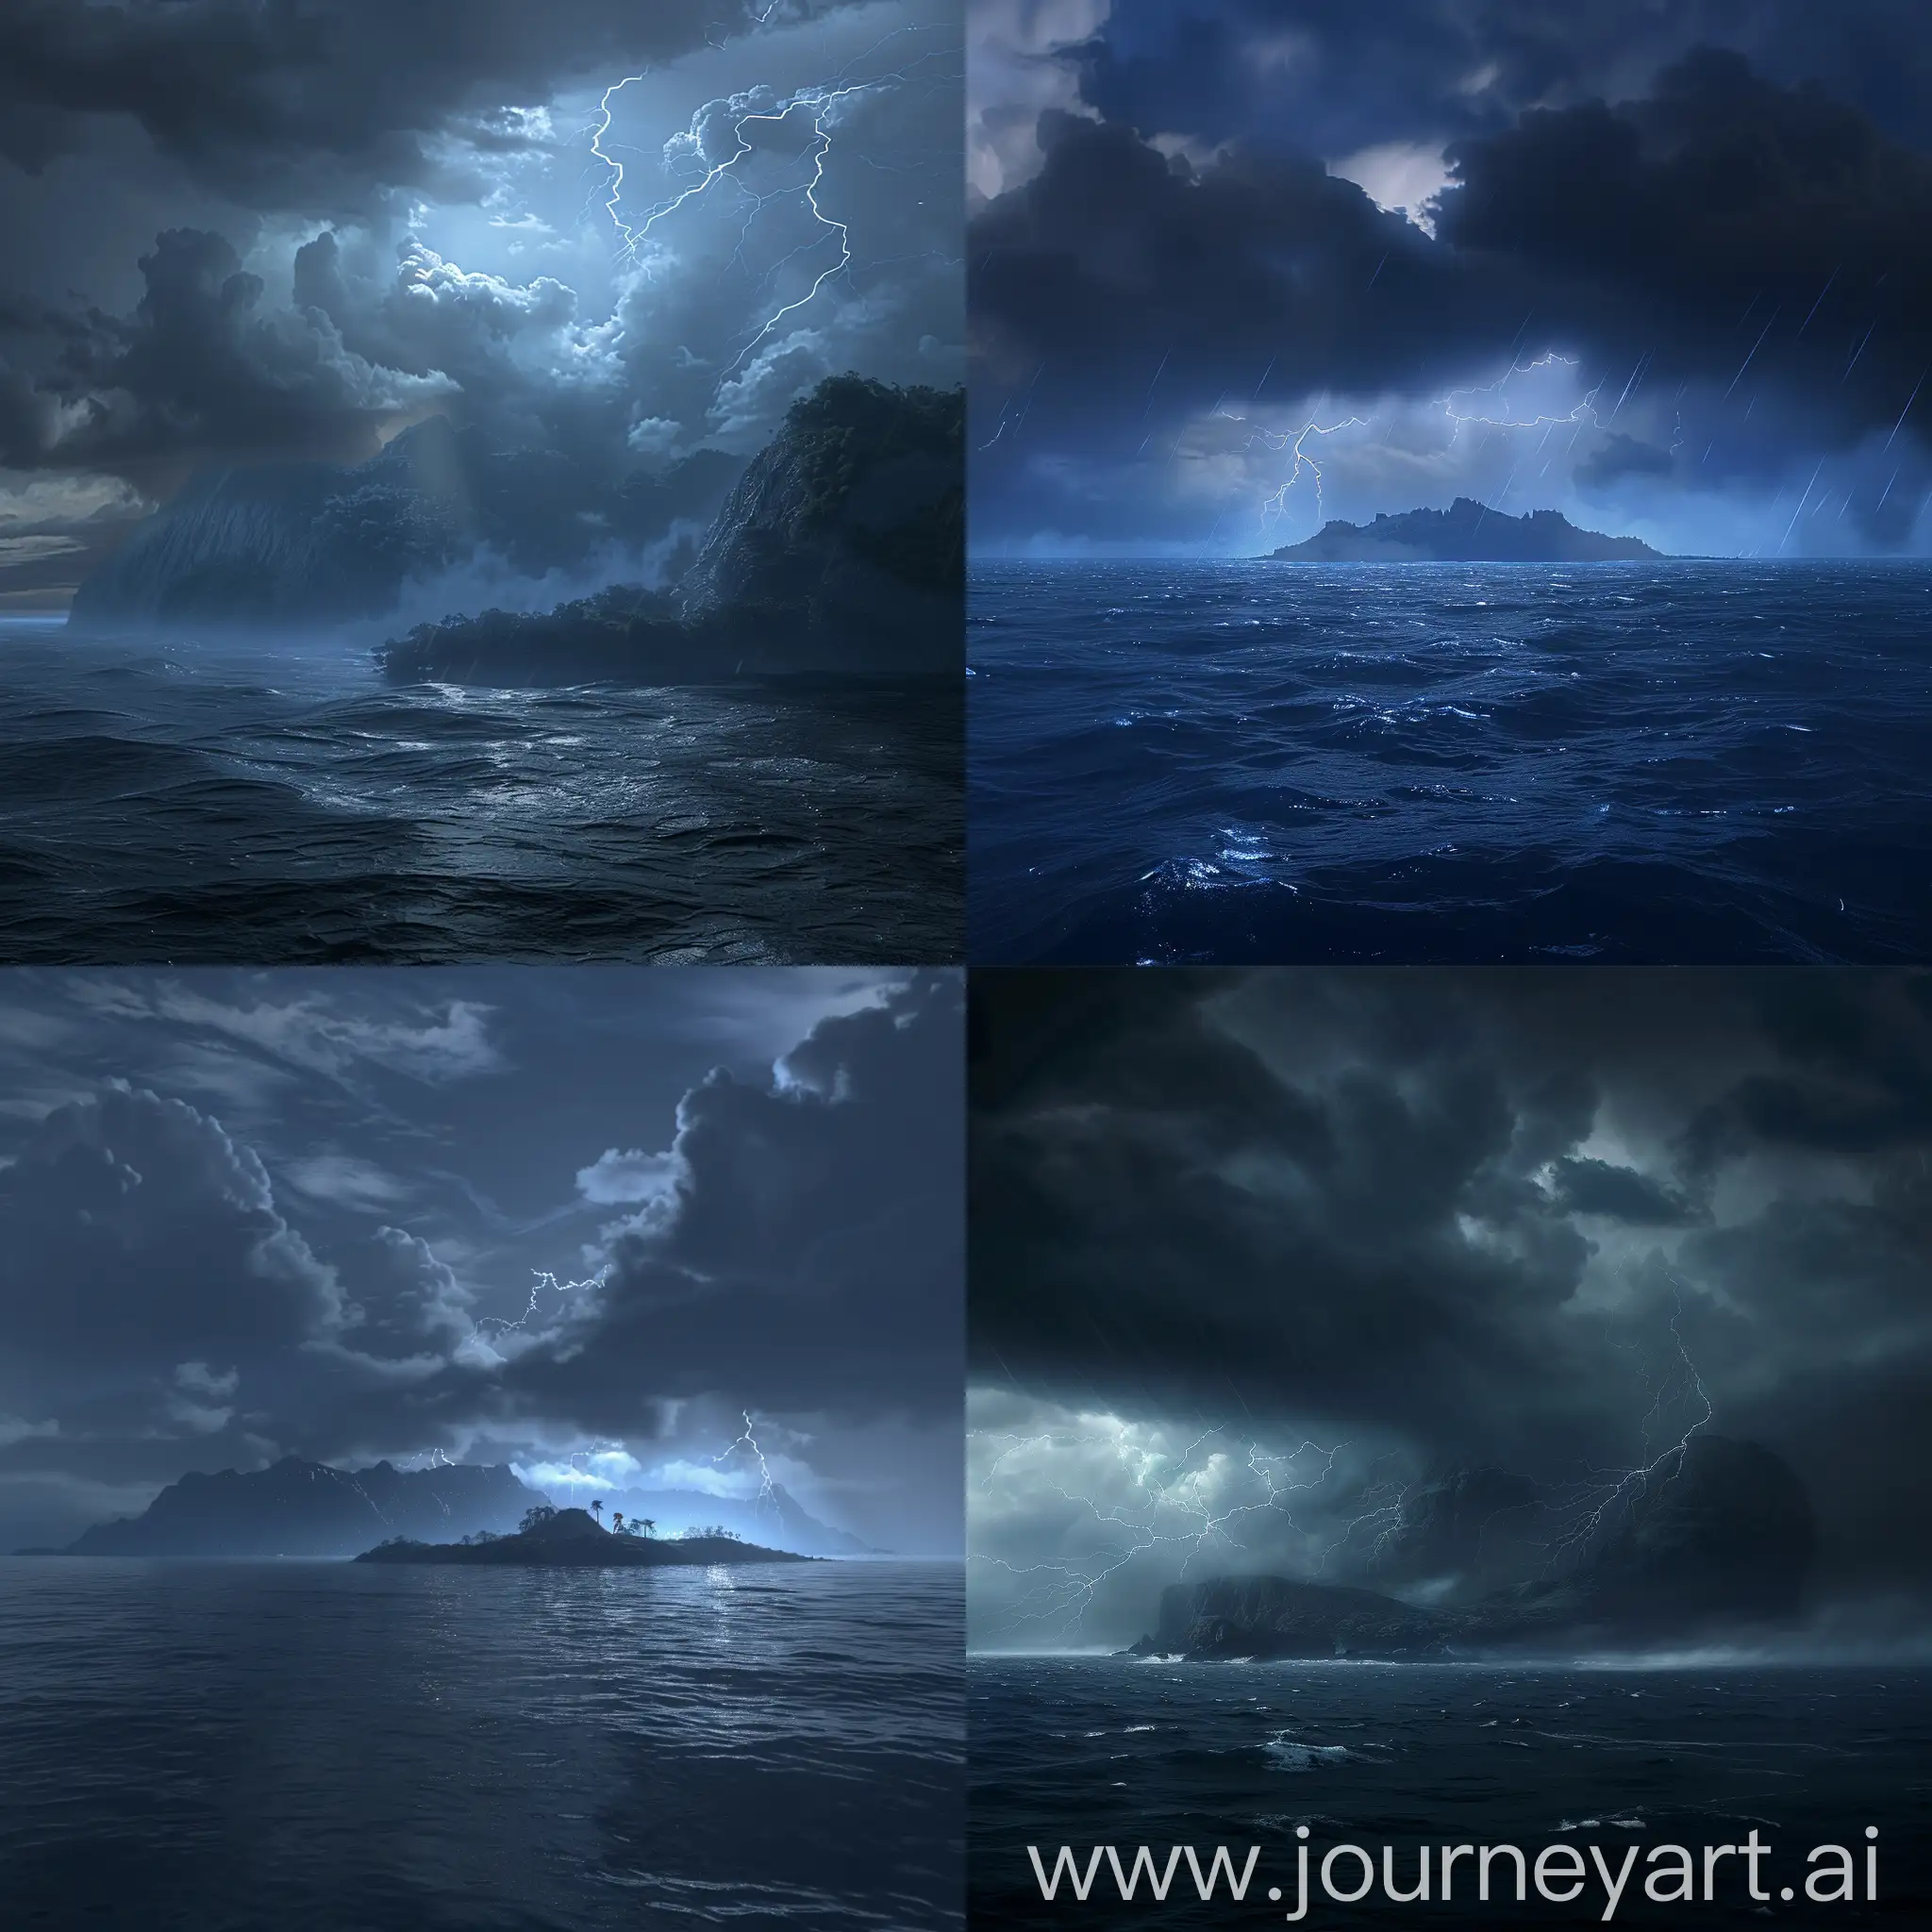 scenery, (no humans), dark ocean, clouds, thunder, (fog), island hidden, realistic, dreamy,32k, HDR